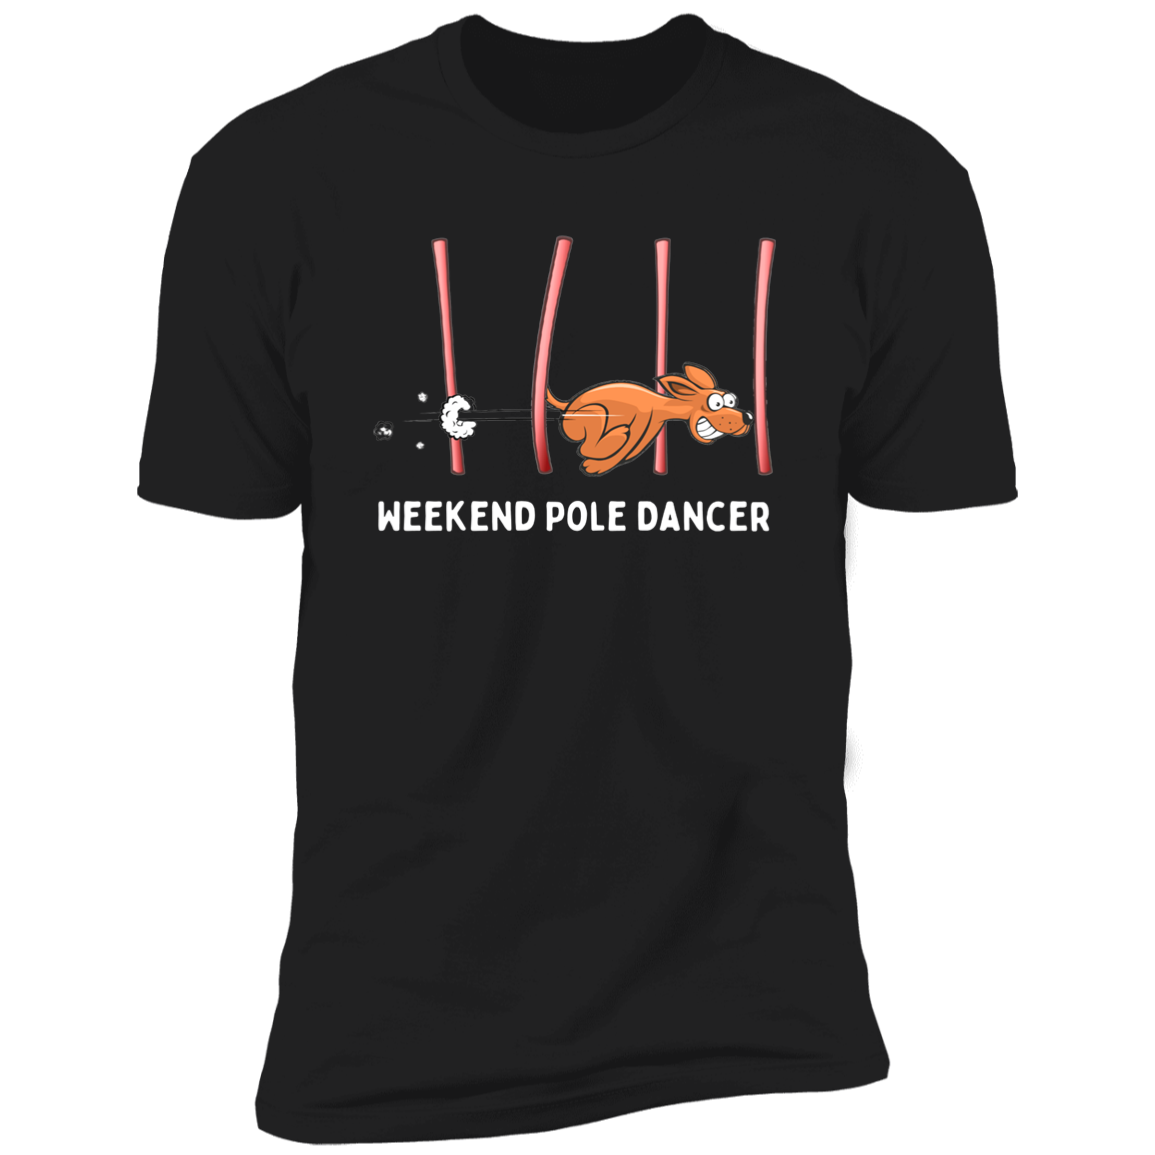 Weekend Pole Dancer Dog Agility T-Shirt, dog shirt for humans, sporting dog shirt, agility dog shirt, in black 